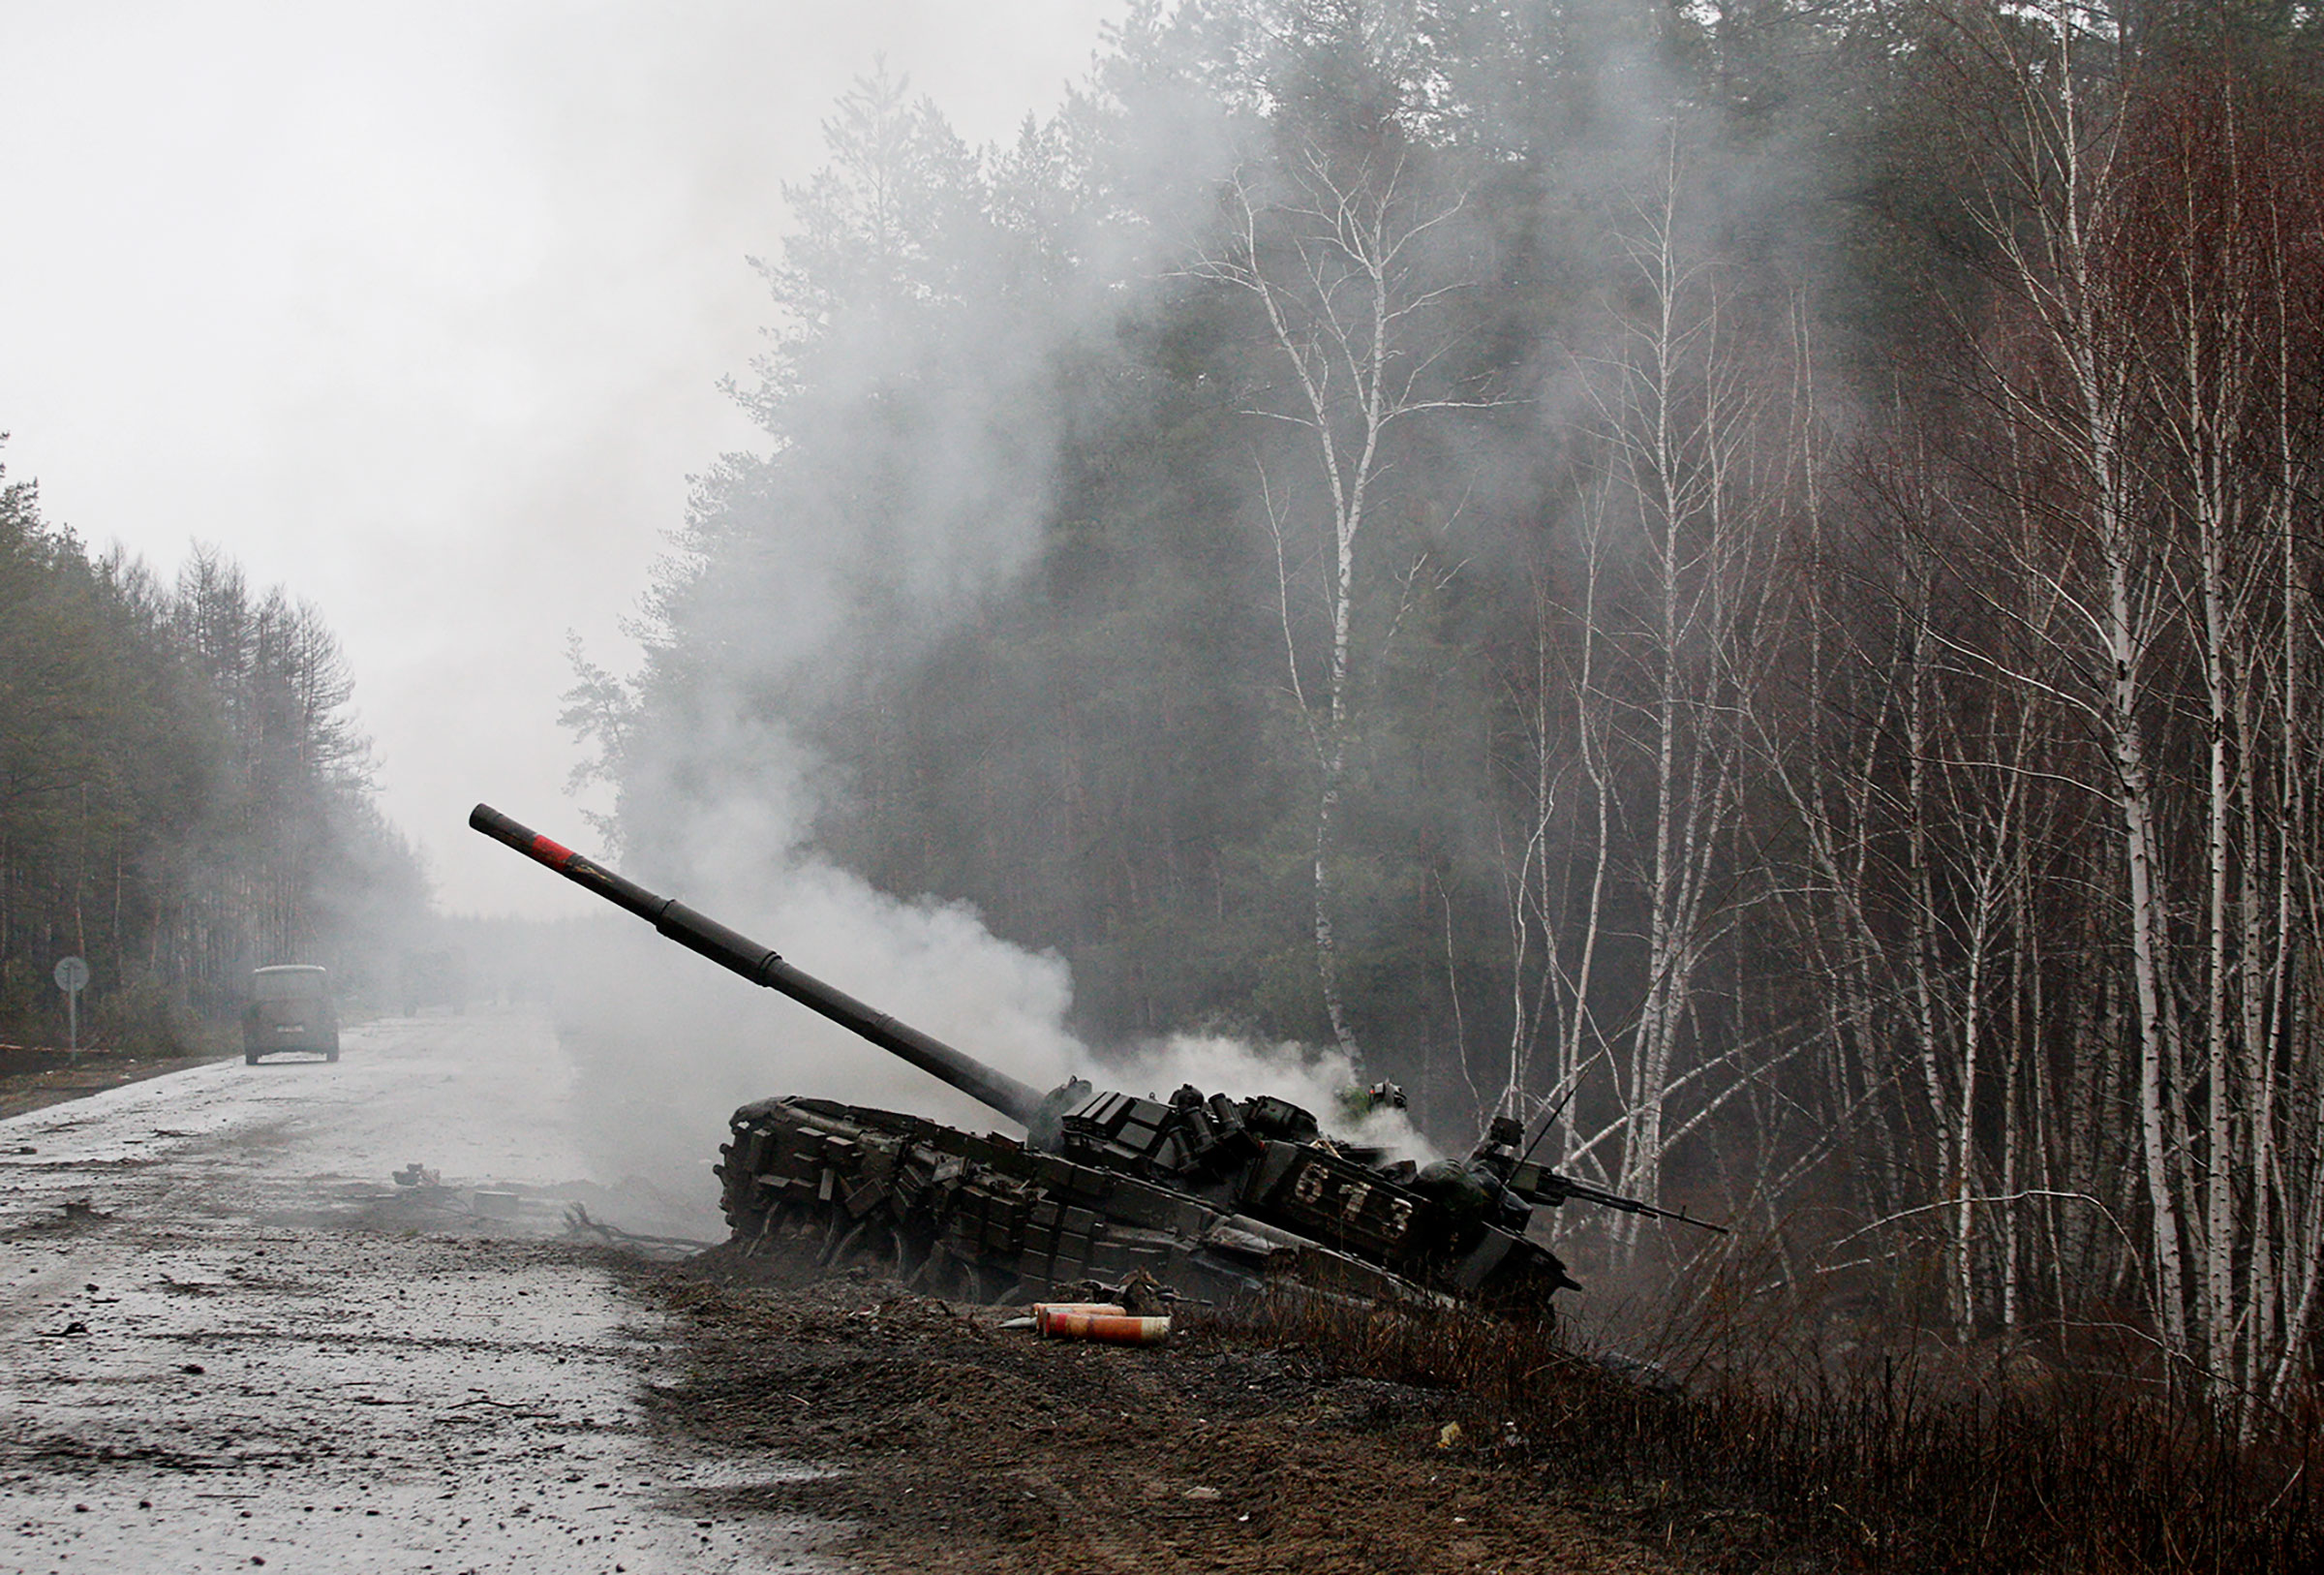 A Russian tank hit by Ukrainian forces